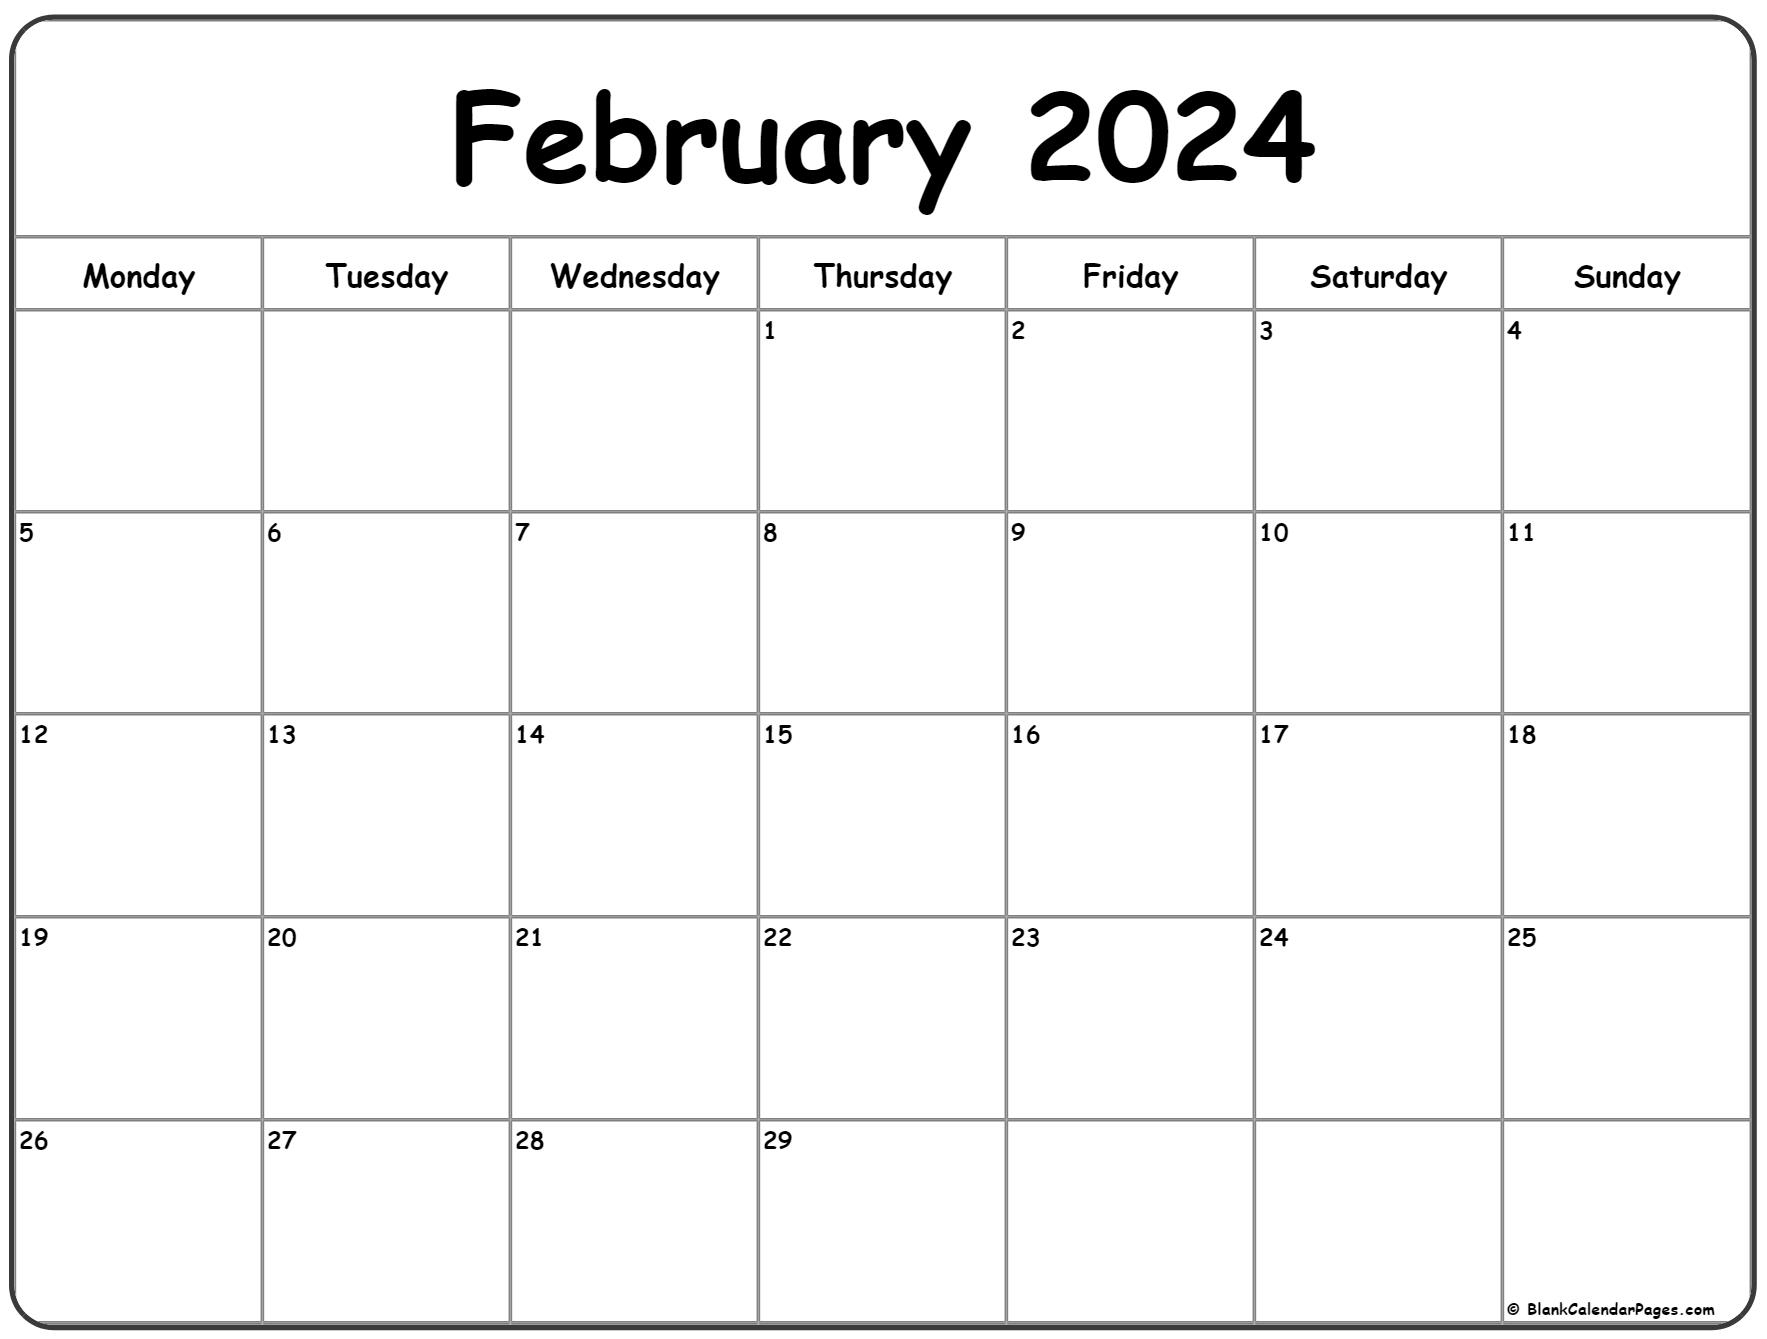 February 2024 Monday Calendar | Monday To Sunday for Blank Feb 2024 Calendar Printable